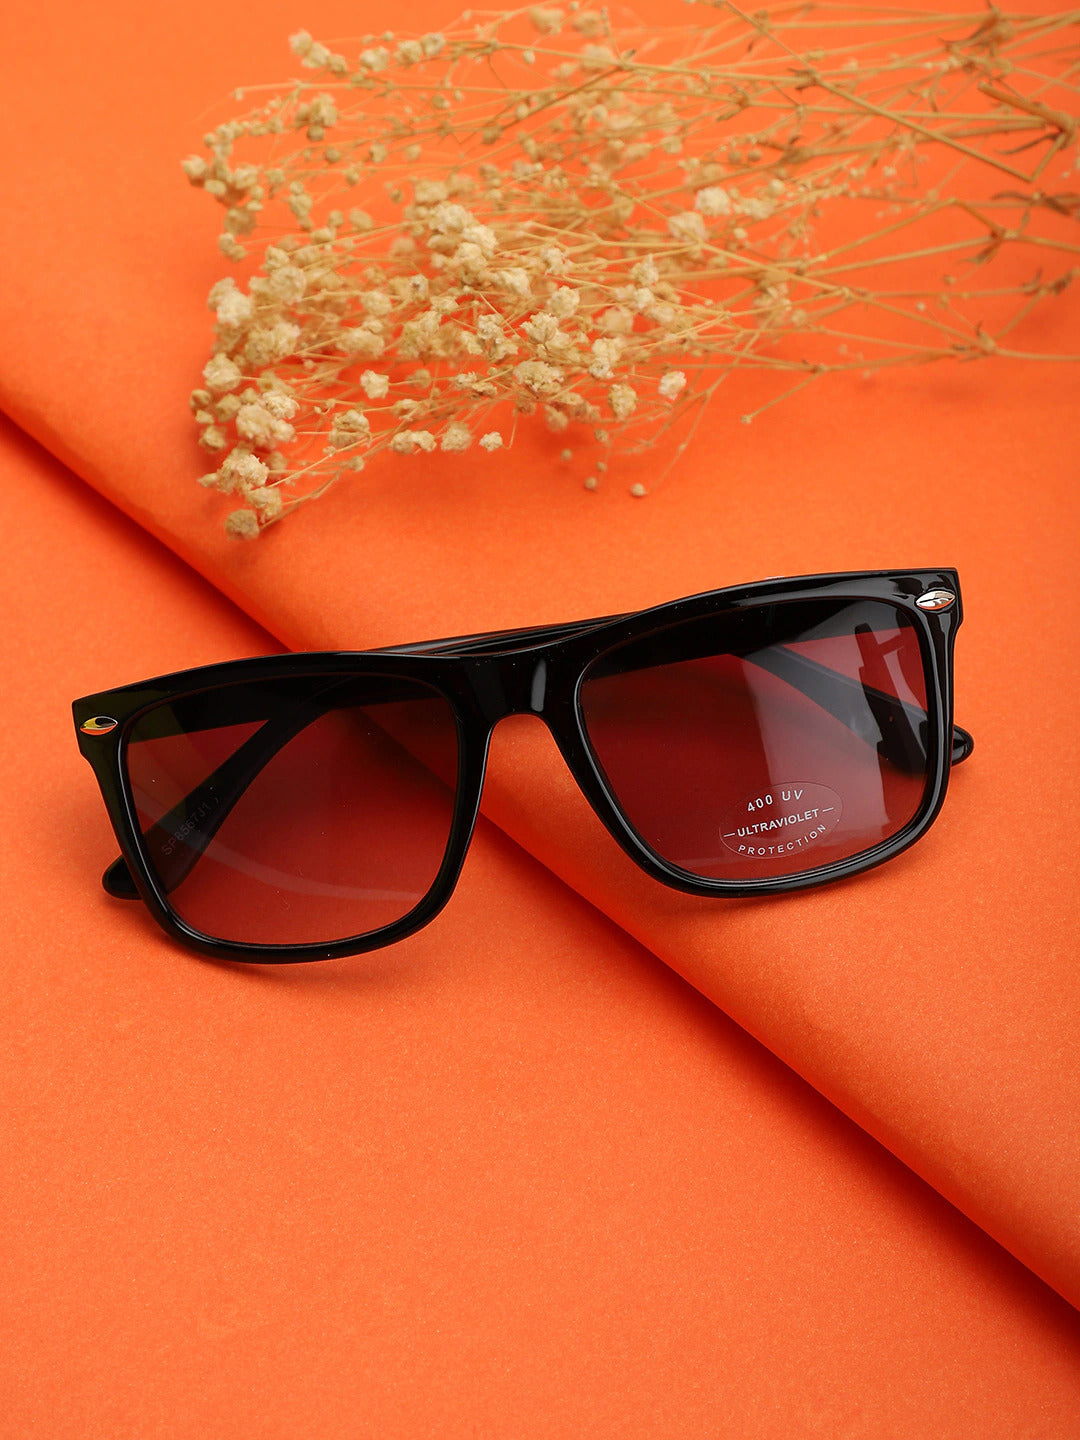 Carlton London Grey Lens & Black Wayfarer Sunglasses With Uv Protected Lens  For Men